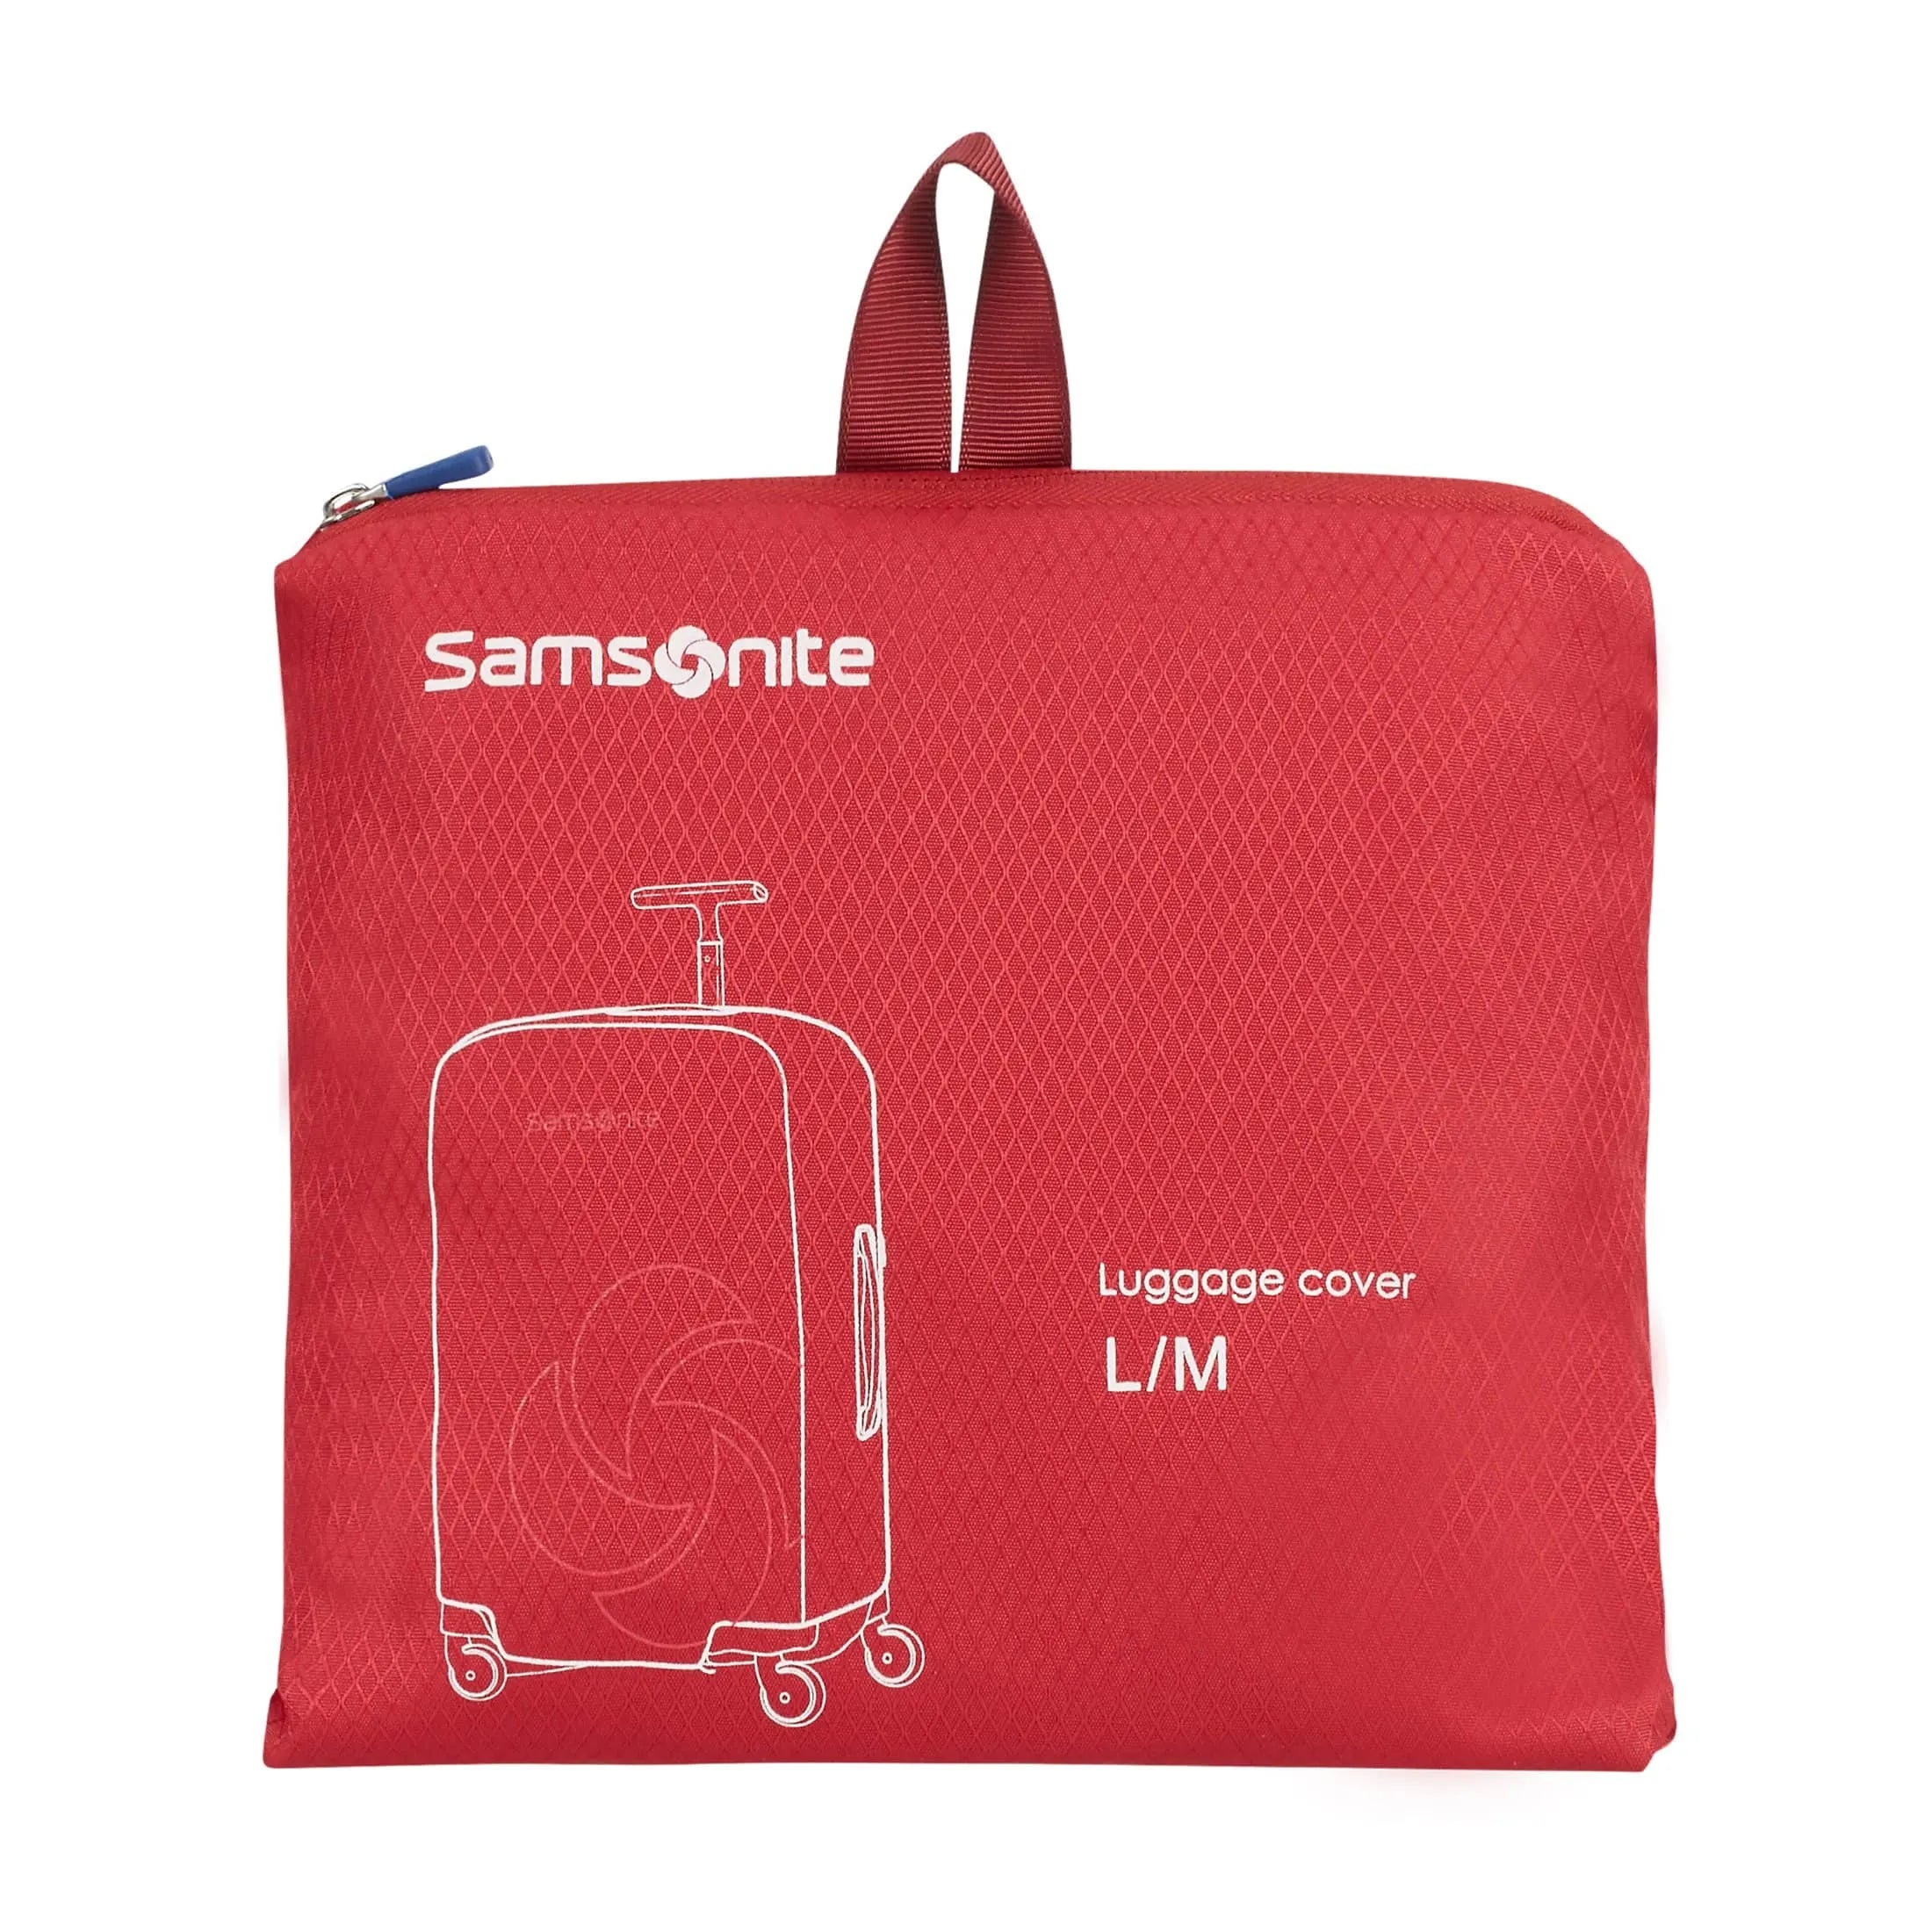 Samsonite Travel Accessories Kofferhülle L/M 75 cm - red